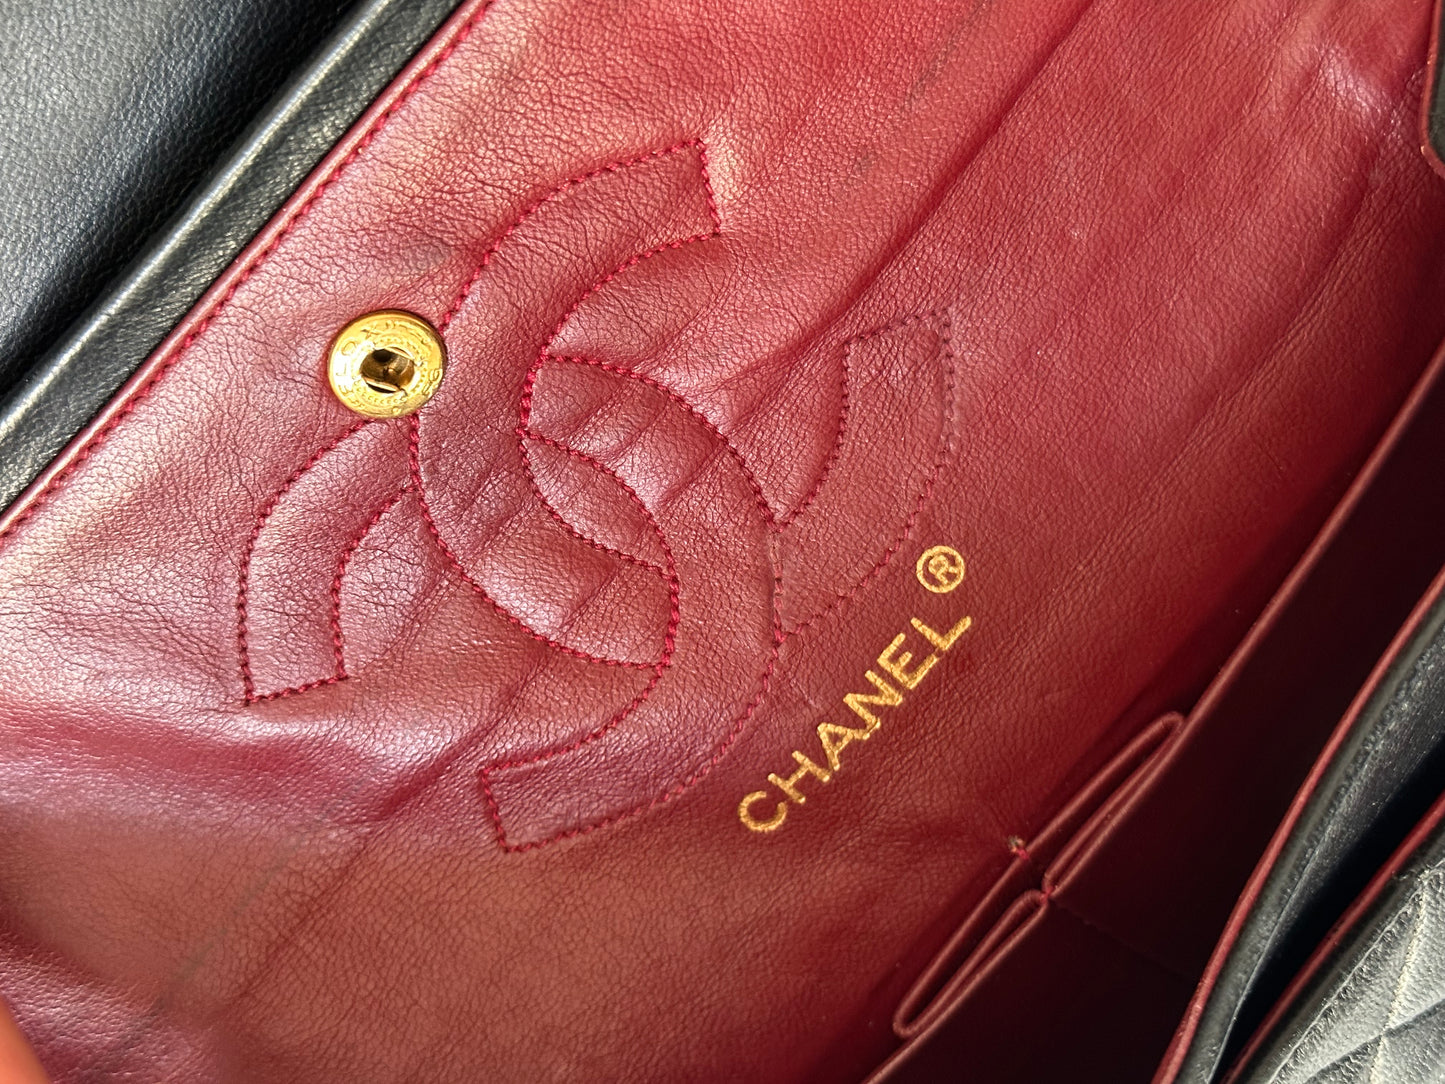 Timeless Chanel Bag